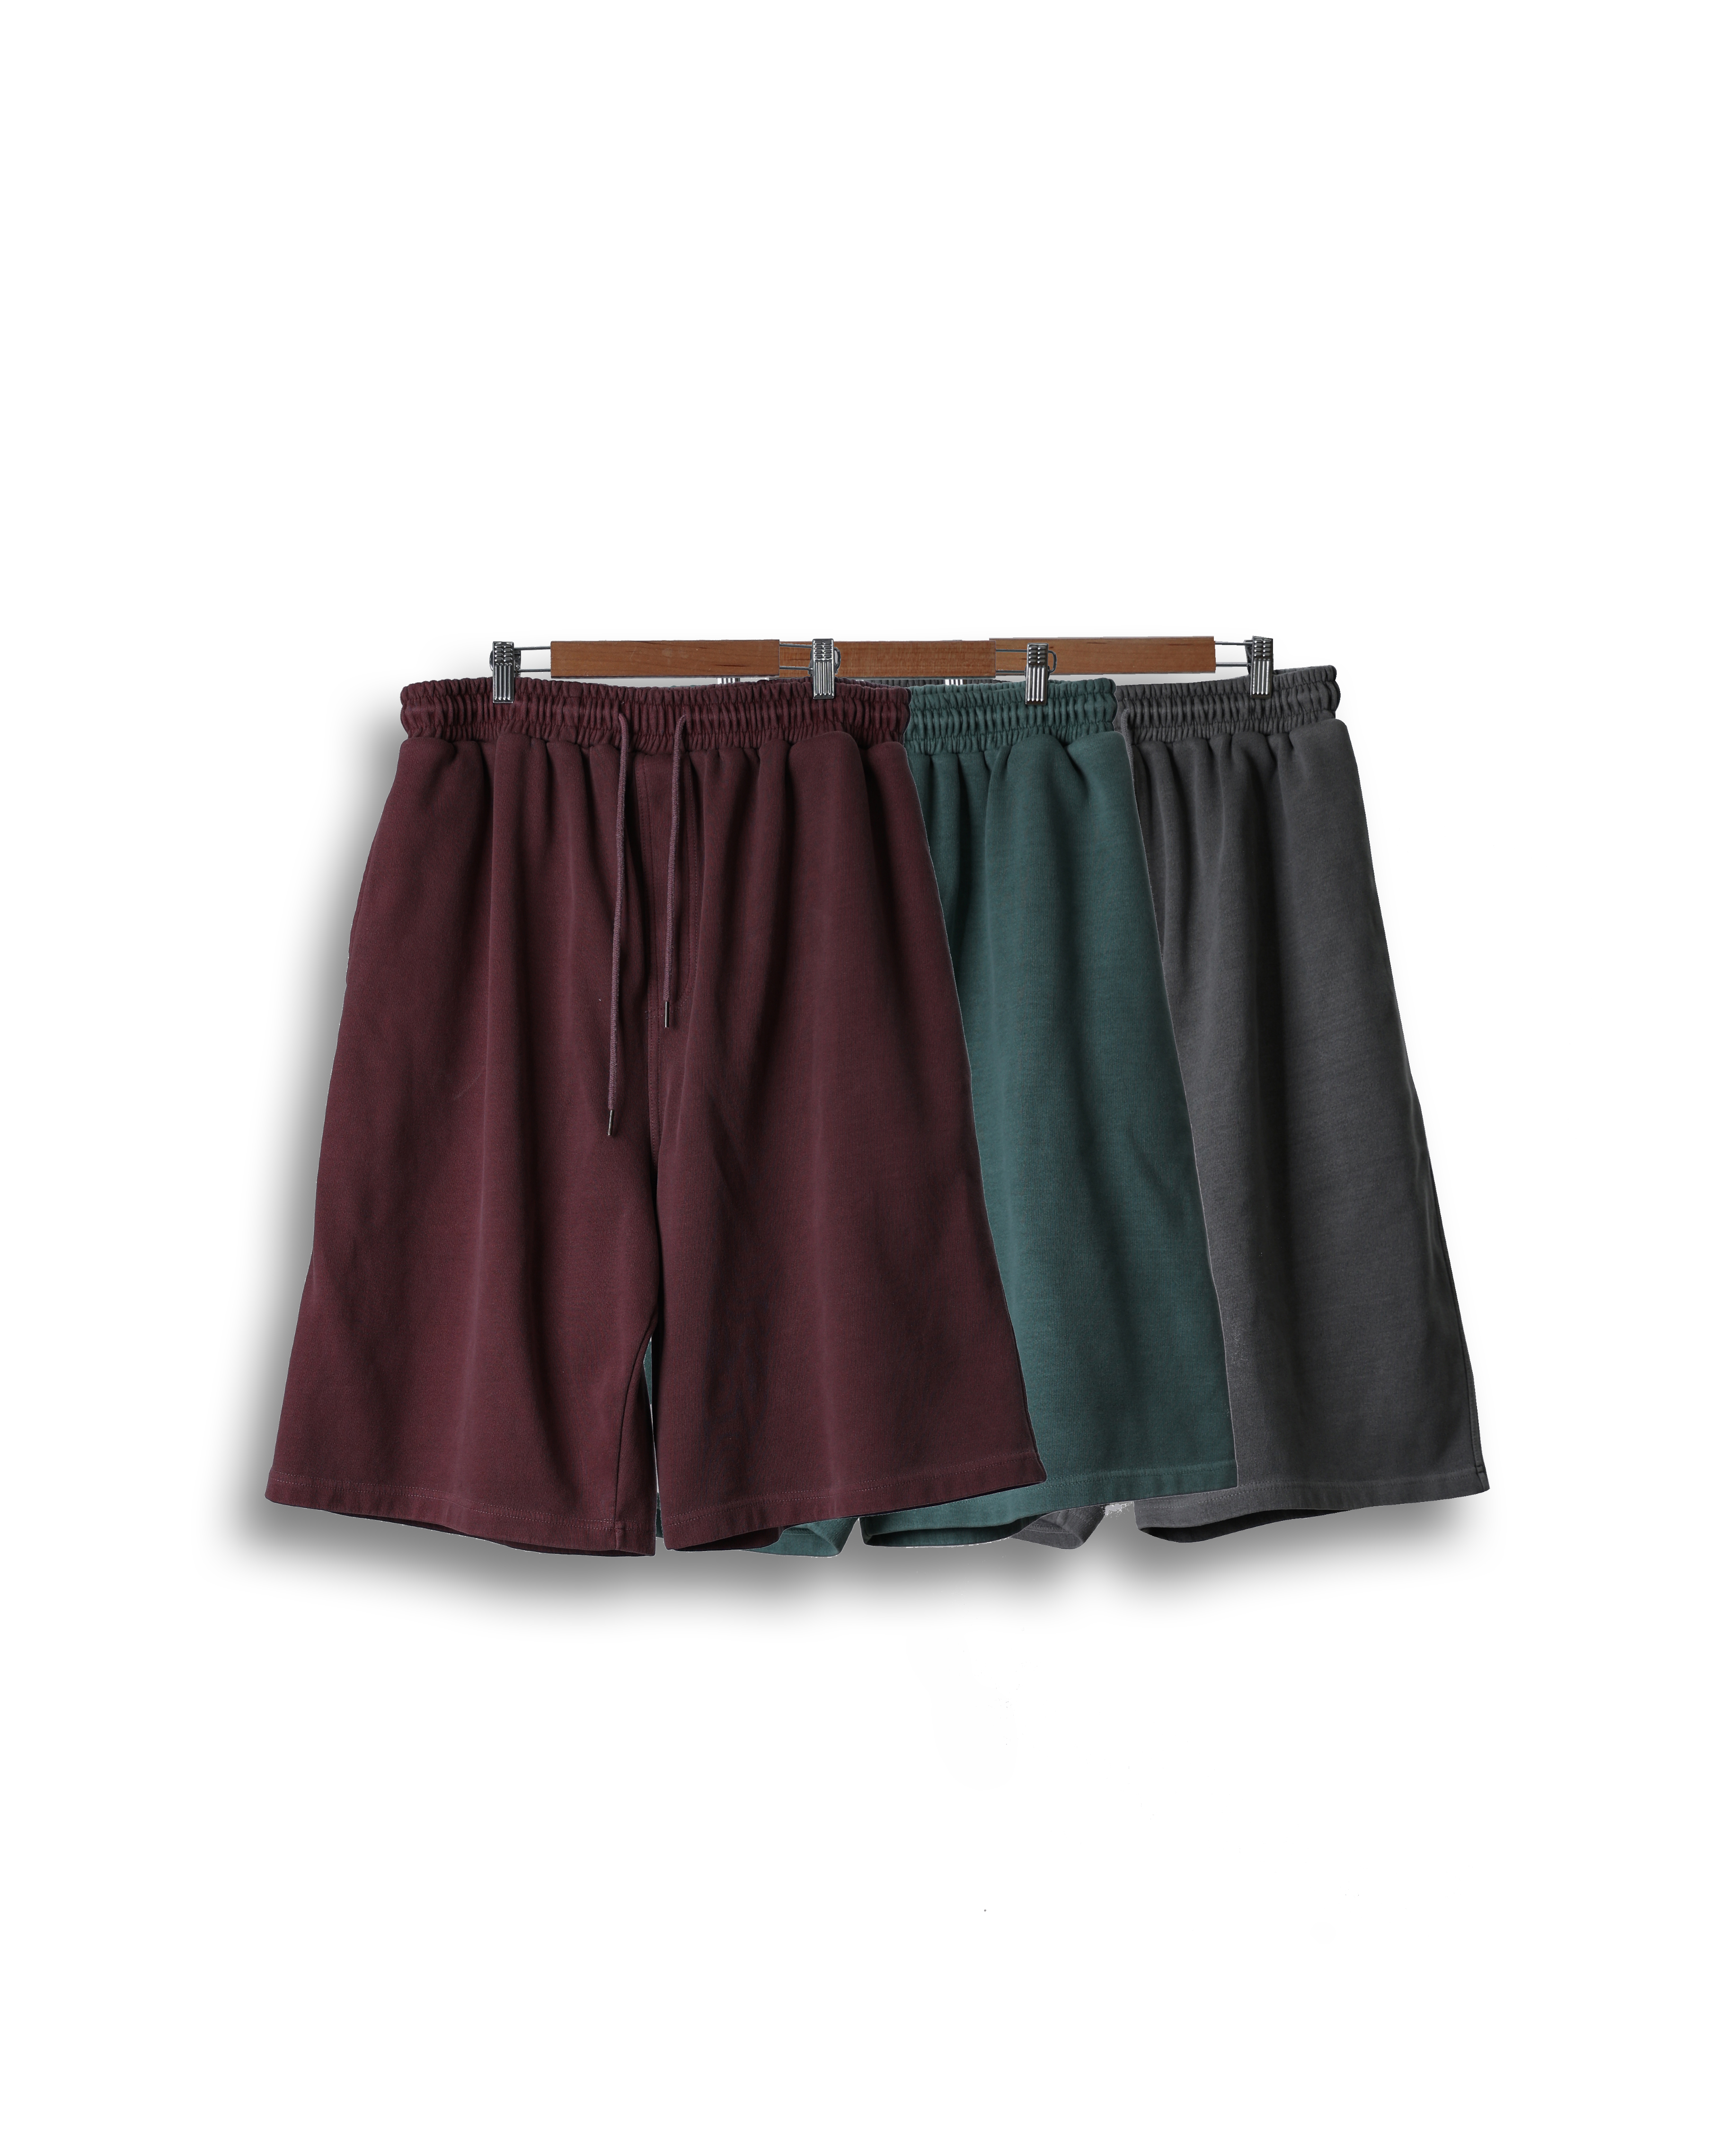 CONS Pigment Bermuda Sweat Pants (Charcoal Gray/Green/Wine)